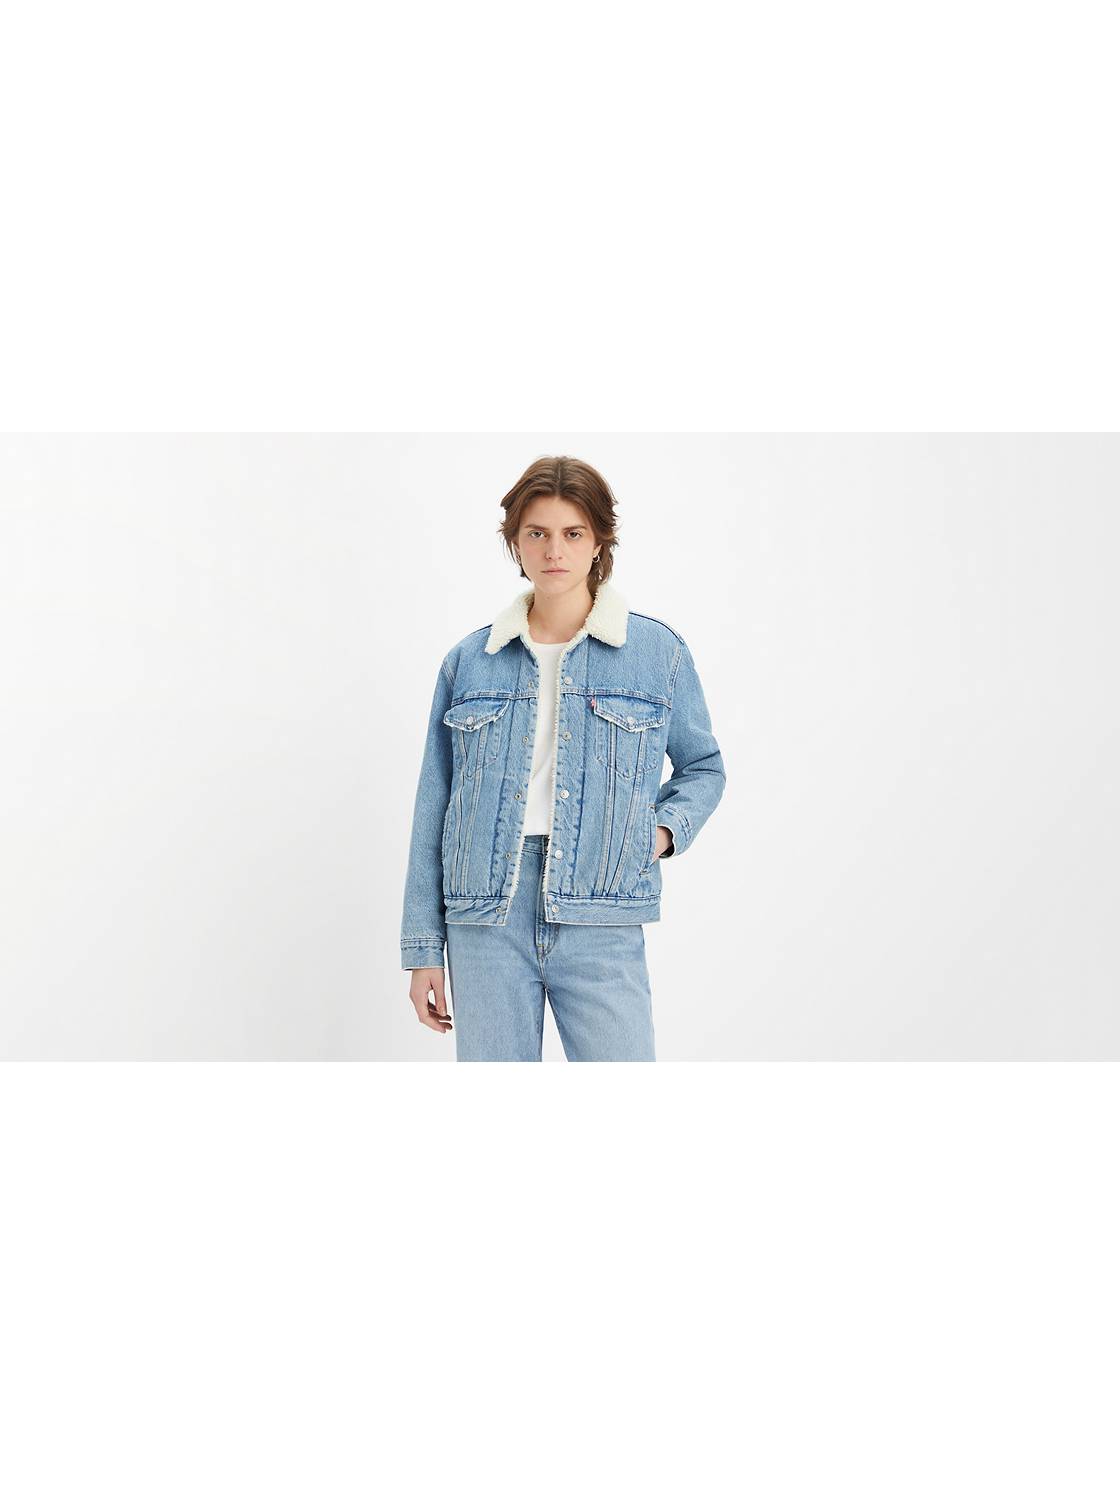 Calças Mulher - Levi's Jeans, Jackets & Clothing